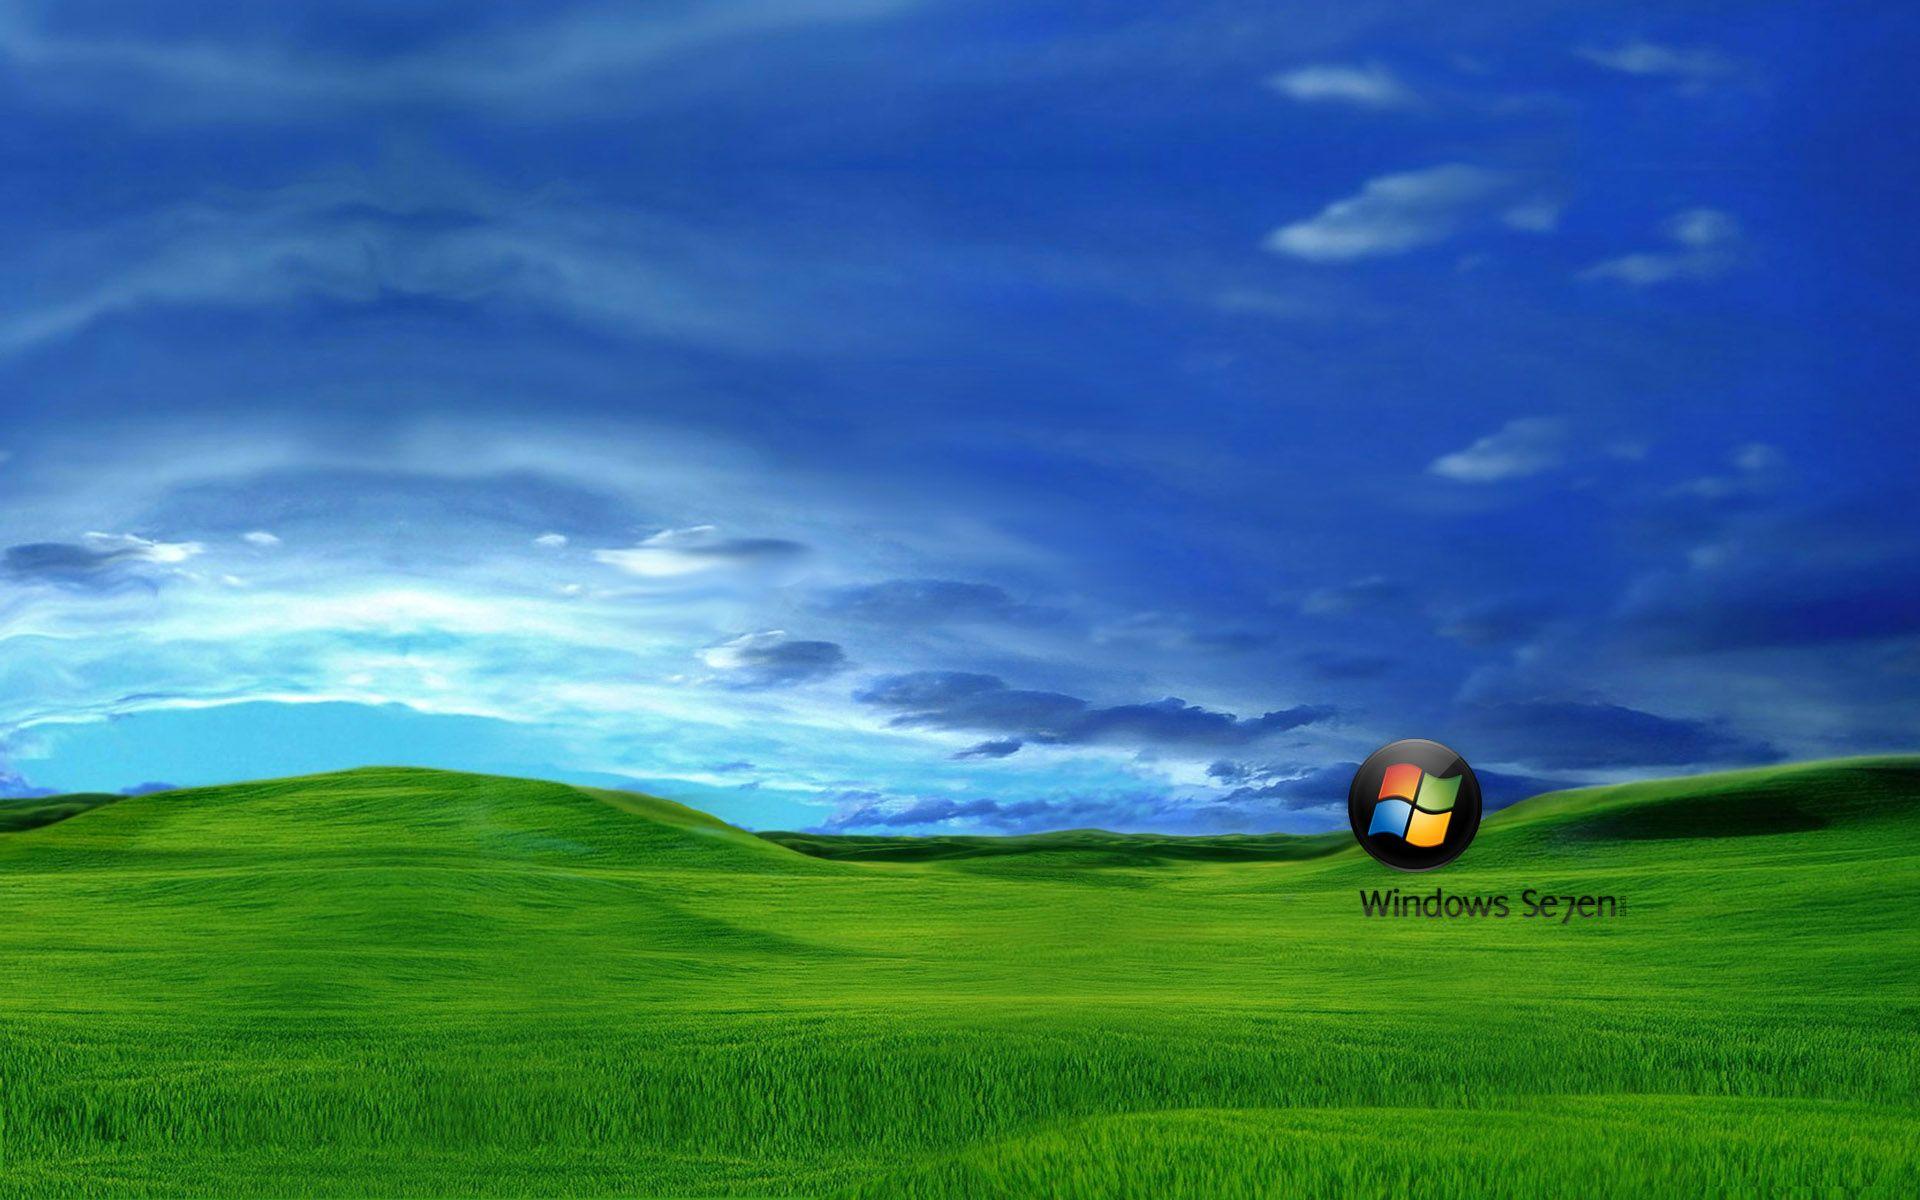 Windows 7 Desktop Wallpaper Location 55112 Wallpaper. wallpicsize